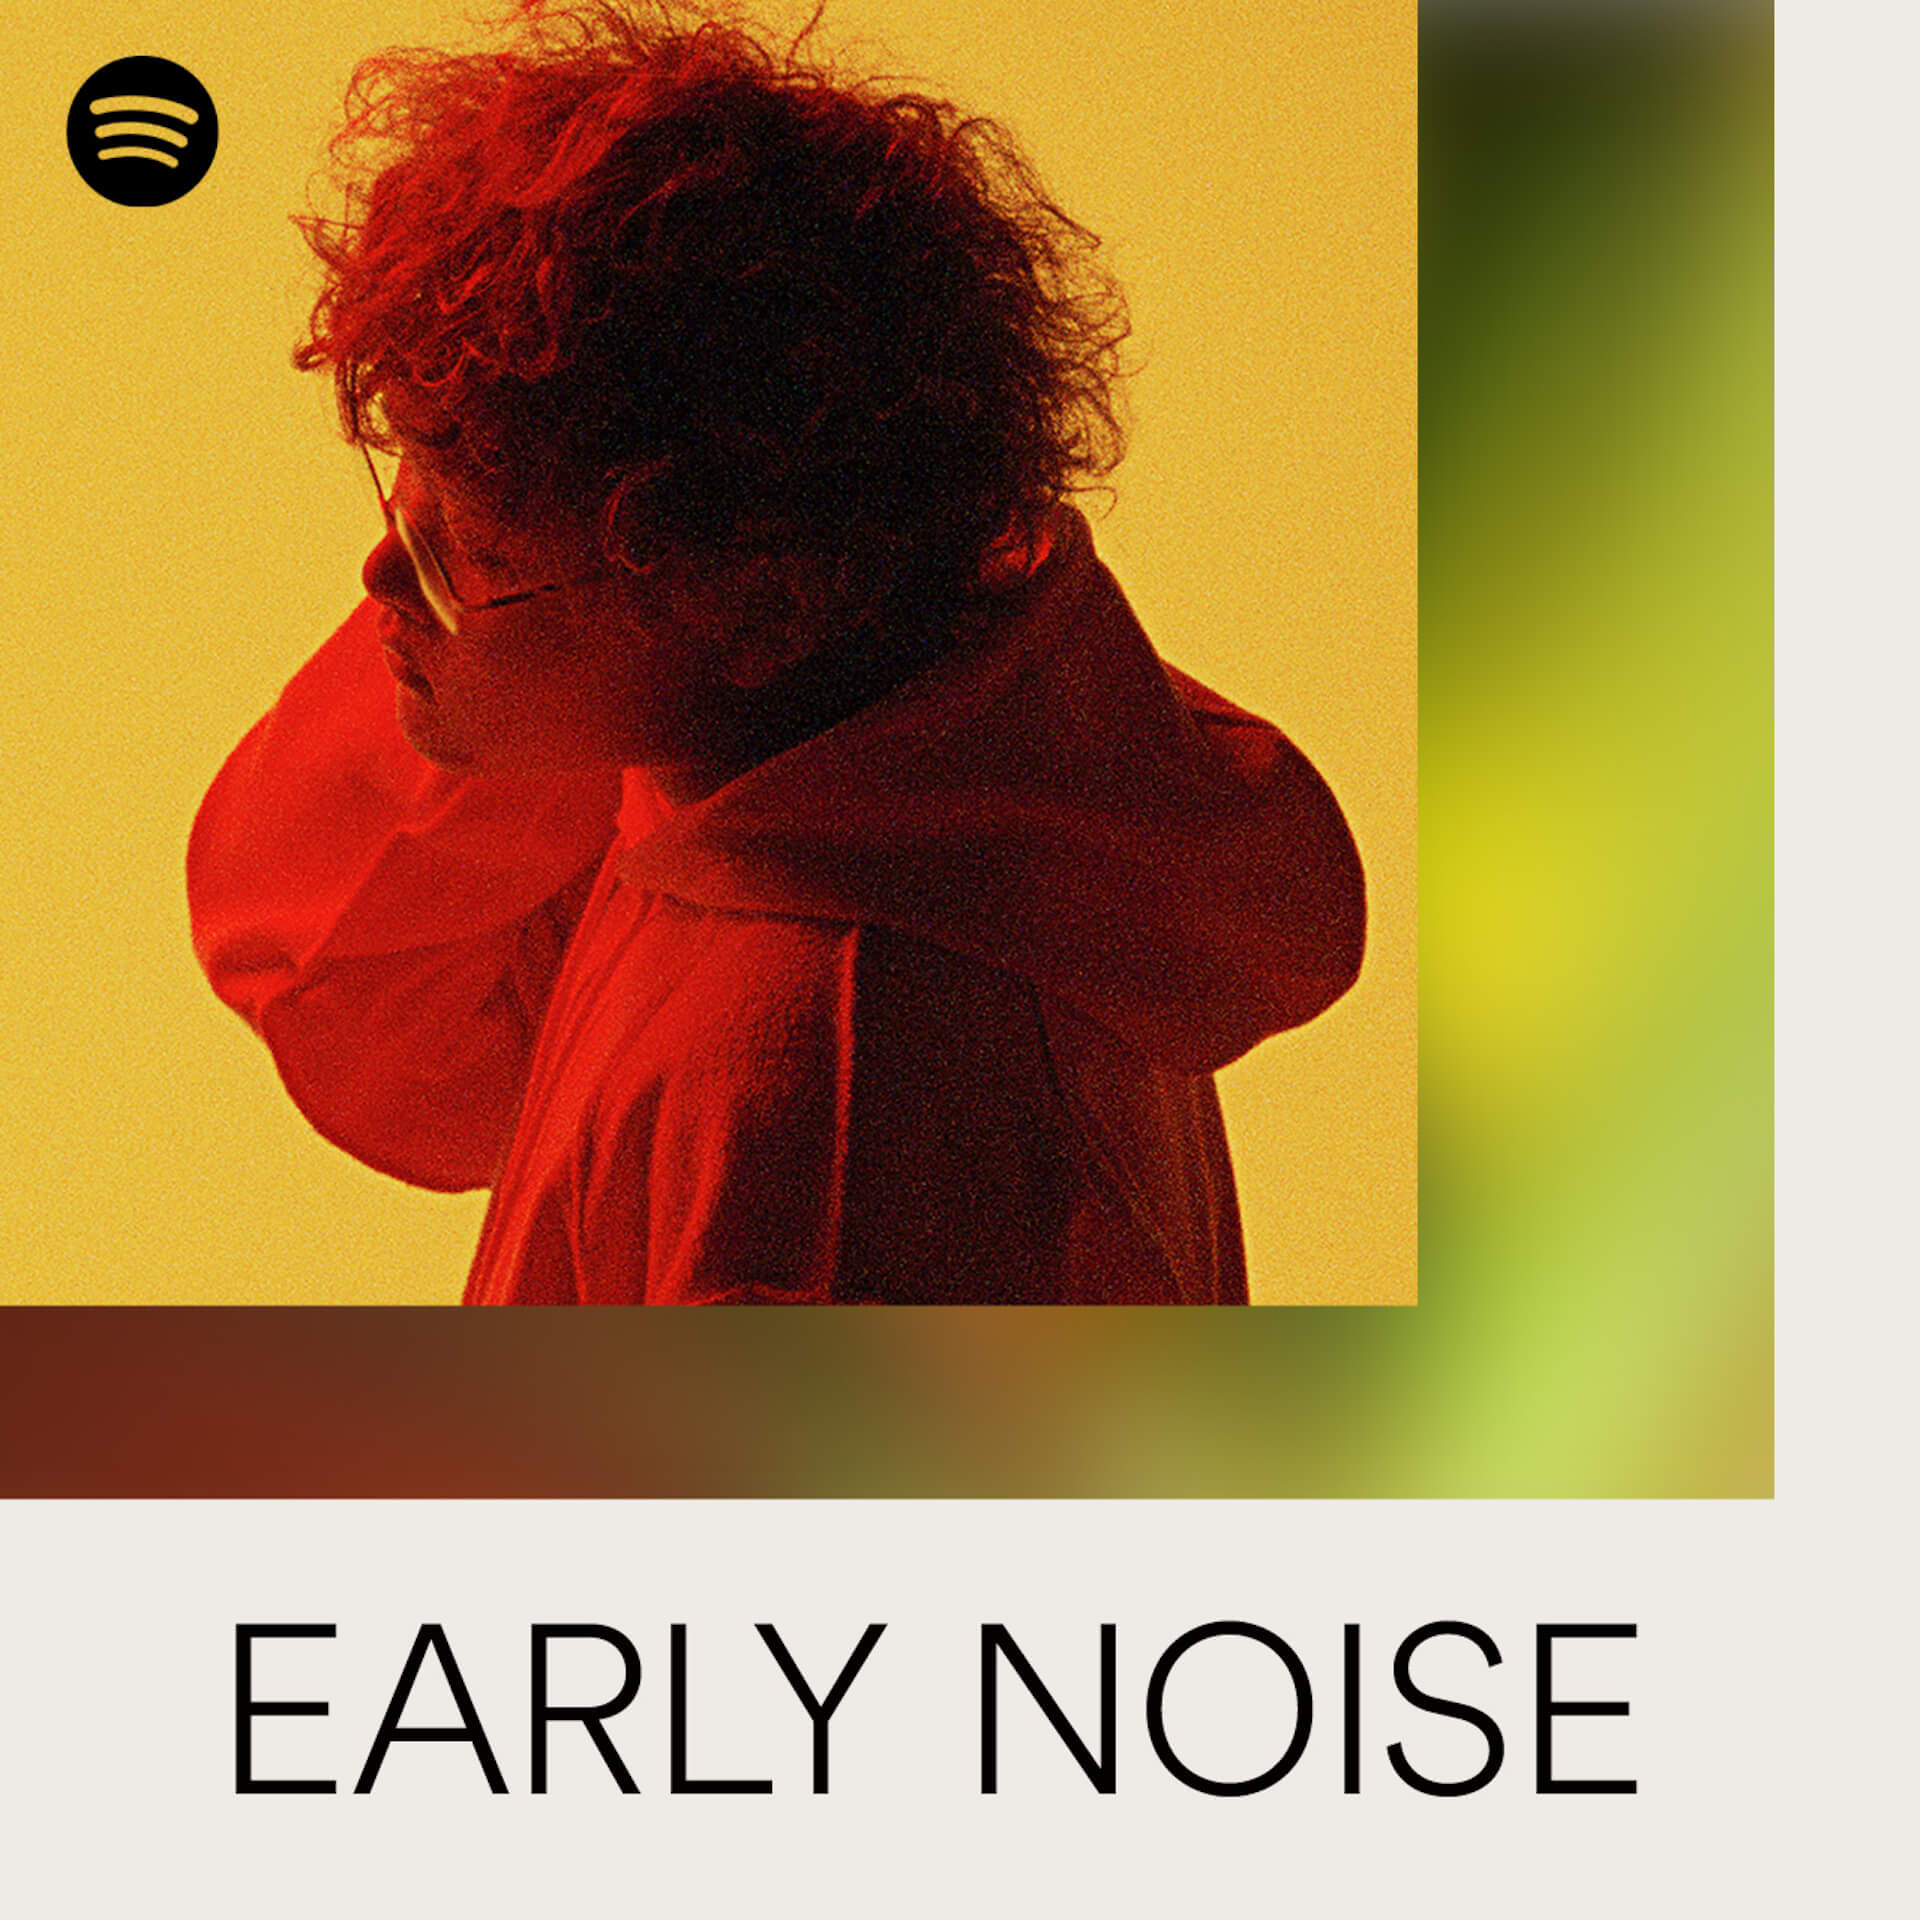 SpotifyがVaundy、Rina Sawayama、藤井 風などが選出されたプログラム『Early Noise』のコーナーを新たに開設！オリジナルプレイリストなども展開 music2020918-spotify1